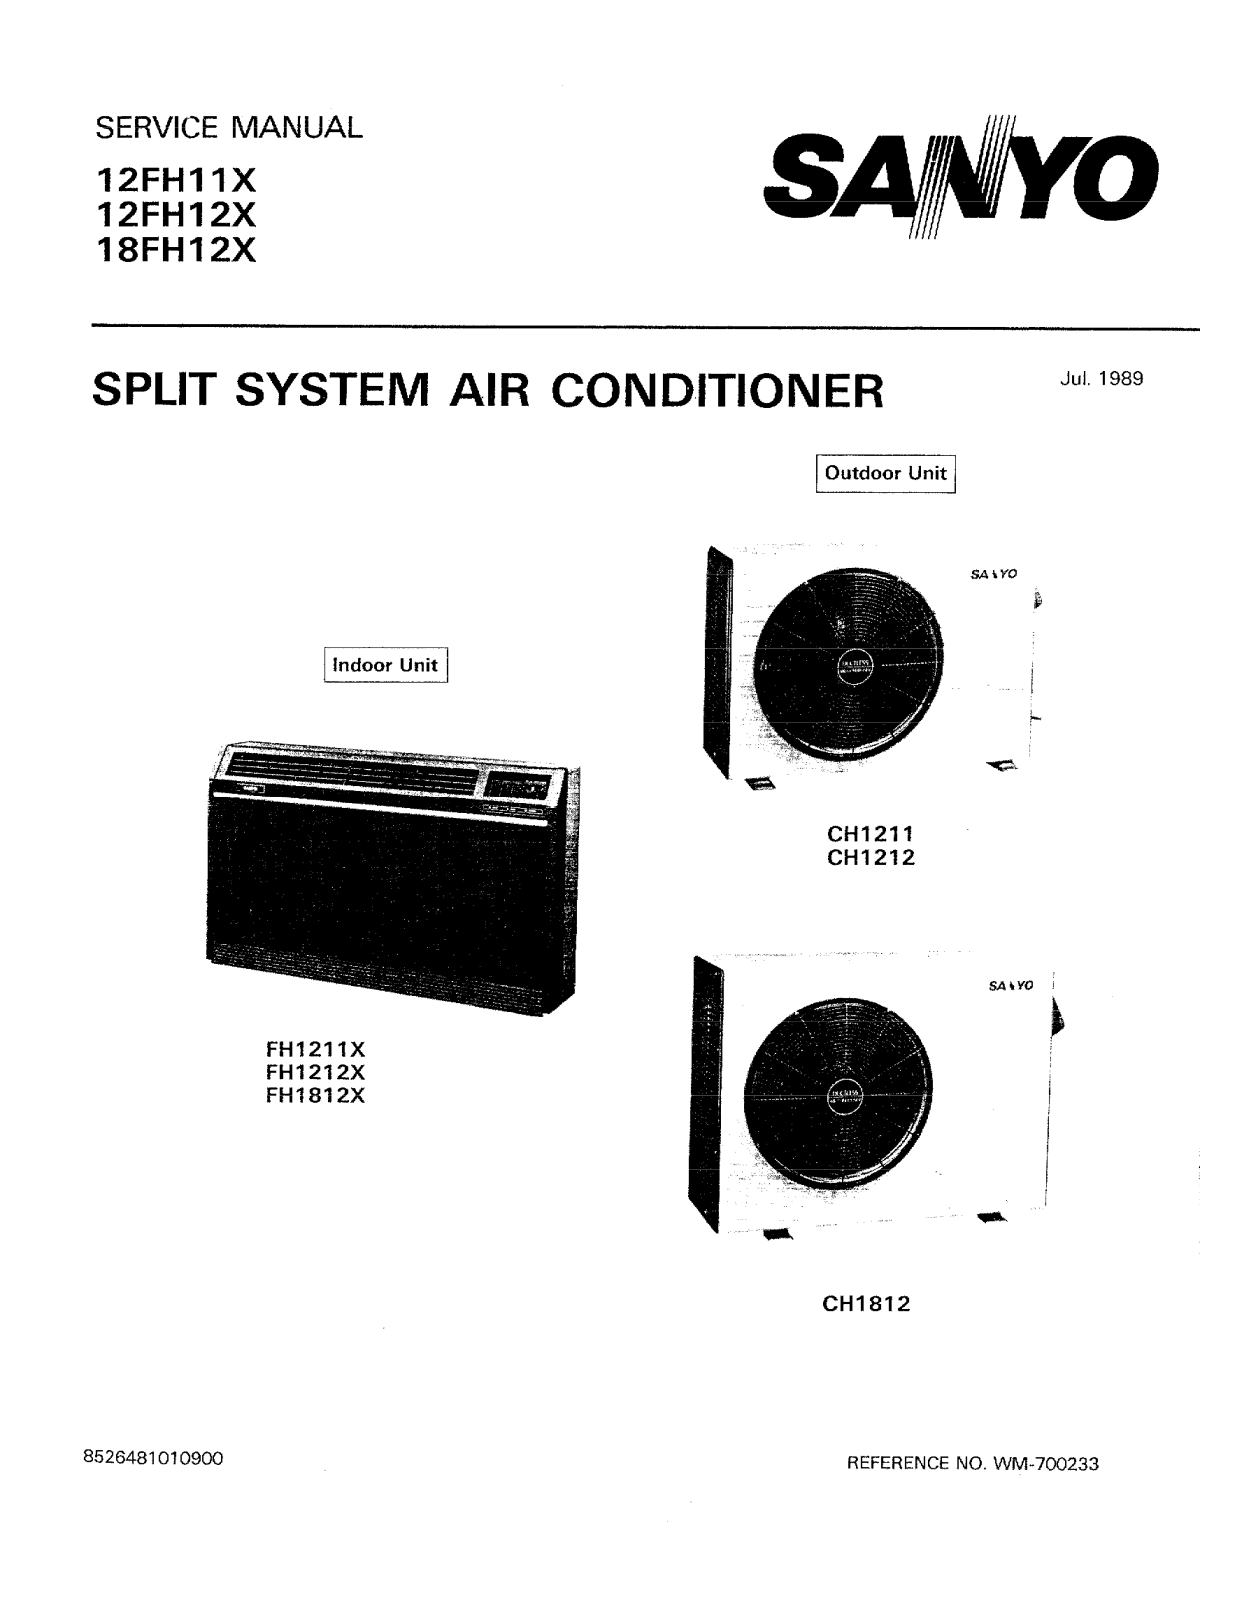 Sanyo 18FH12X, 12FH12X, 12FH11X Service Manual